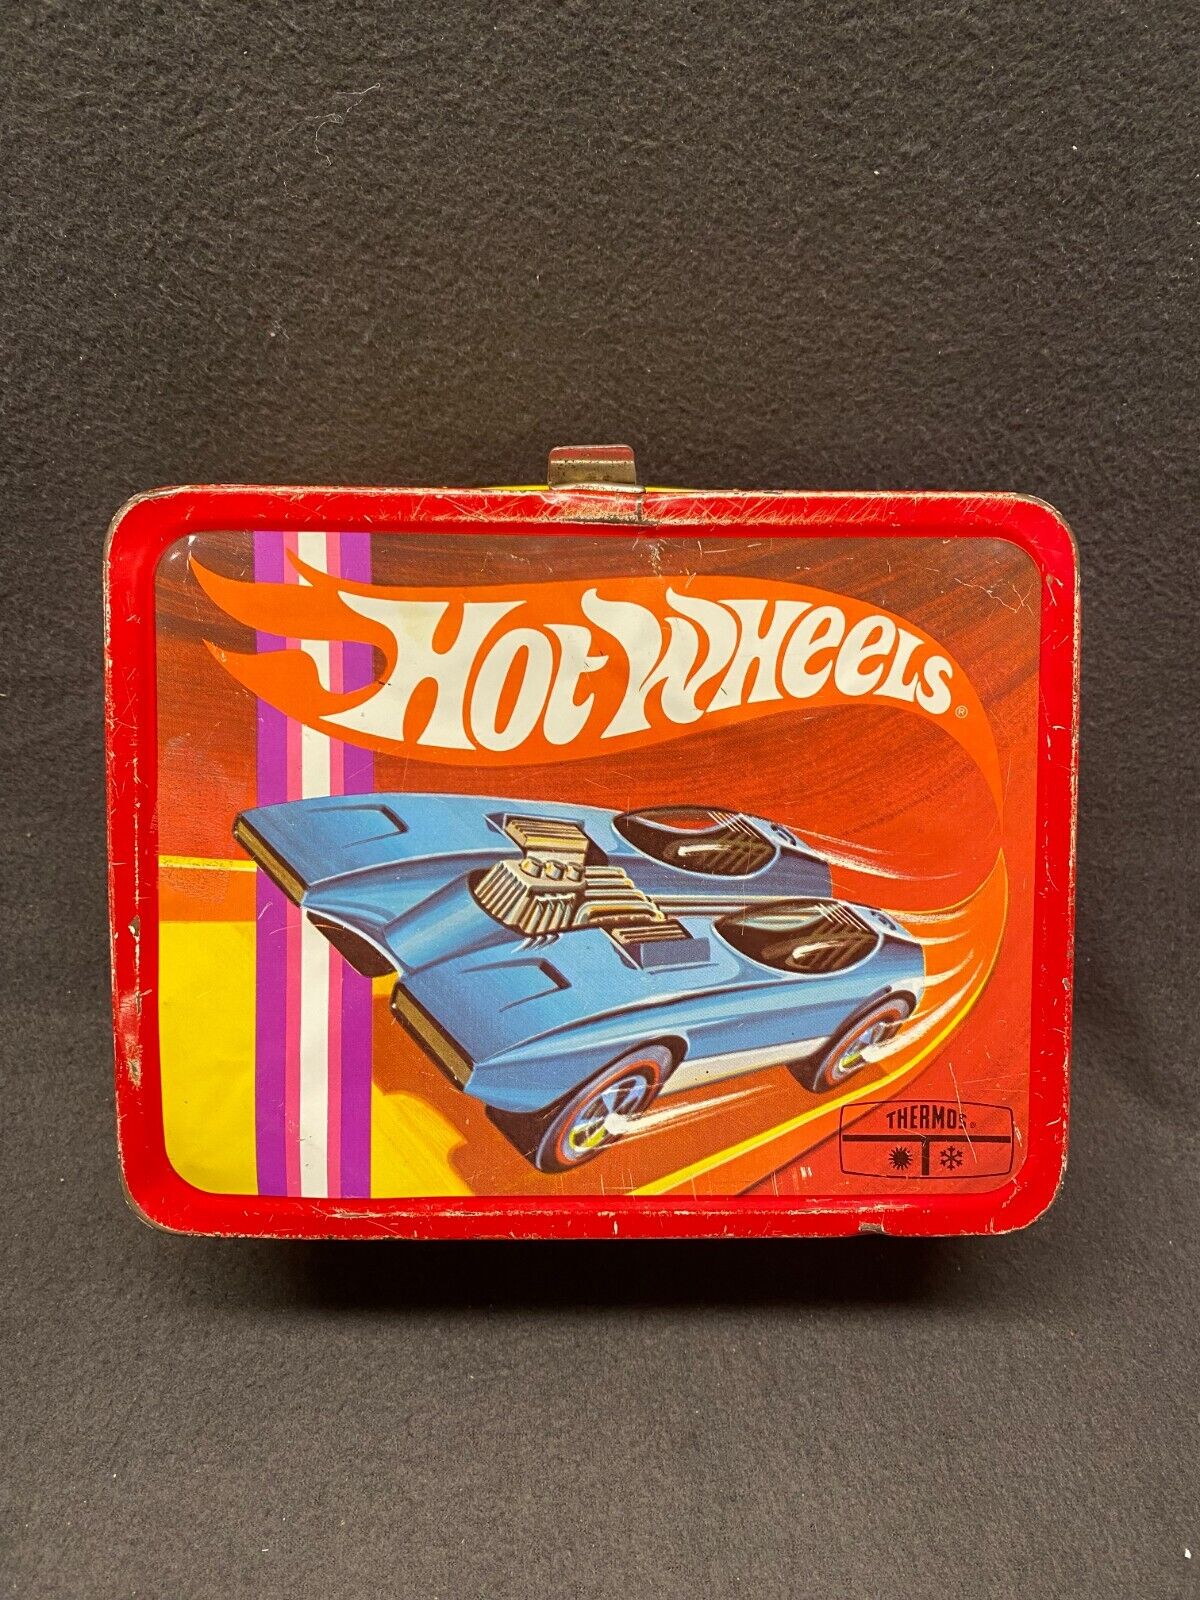 Hot Wheels Lunchbox 1969 Redline by Thermos Nice Redlines Vintage Original RARE